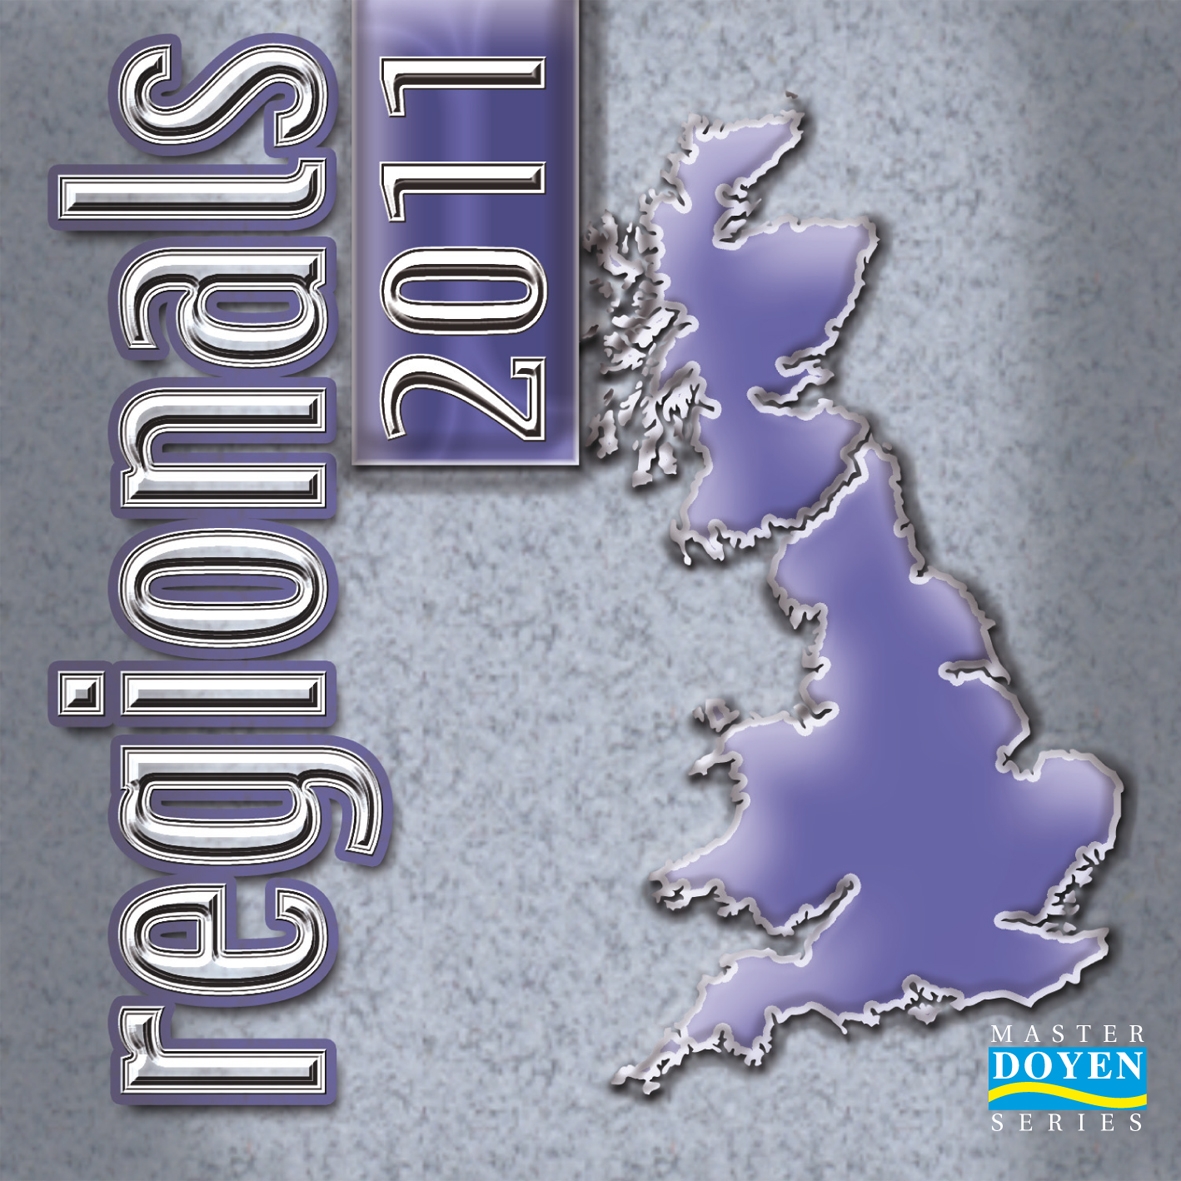 Regionals 2011 - CD